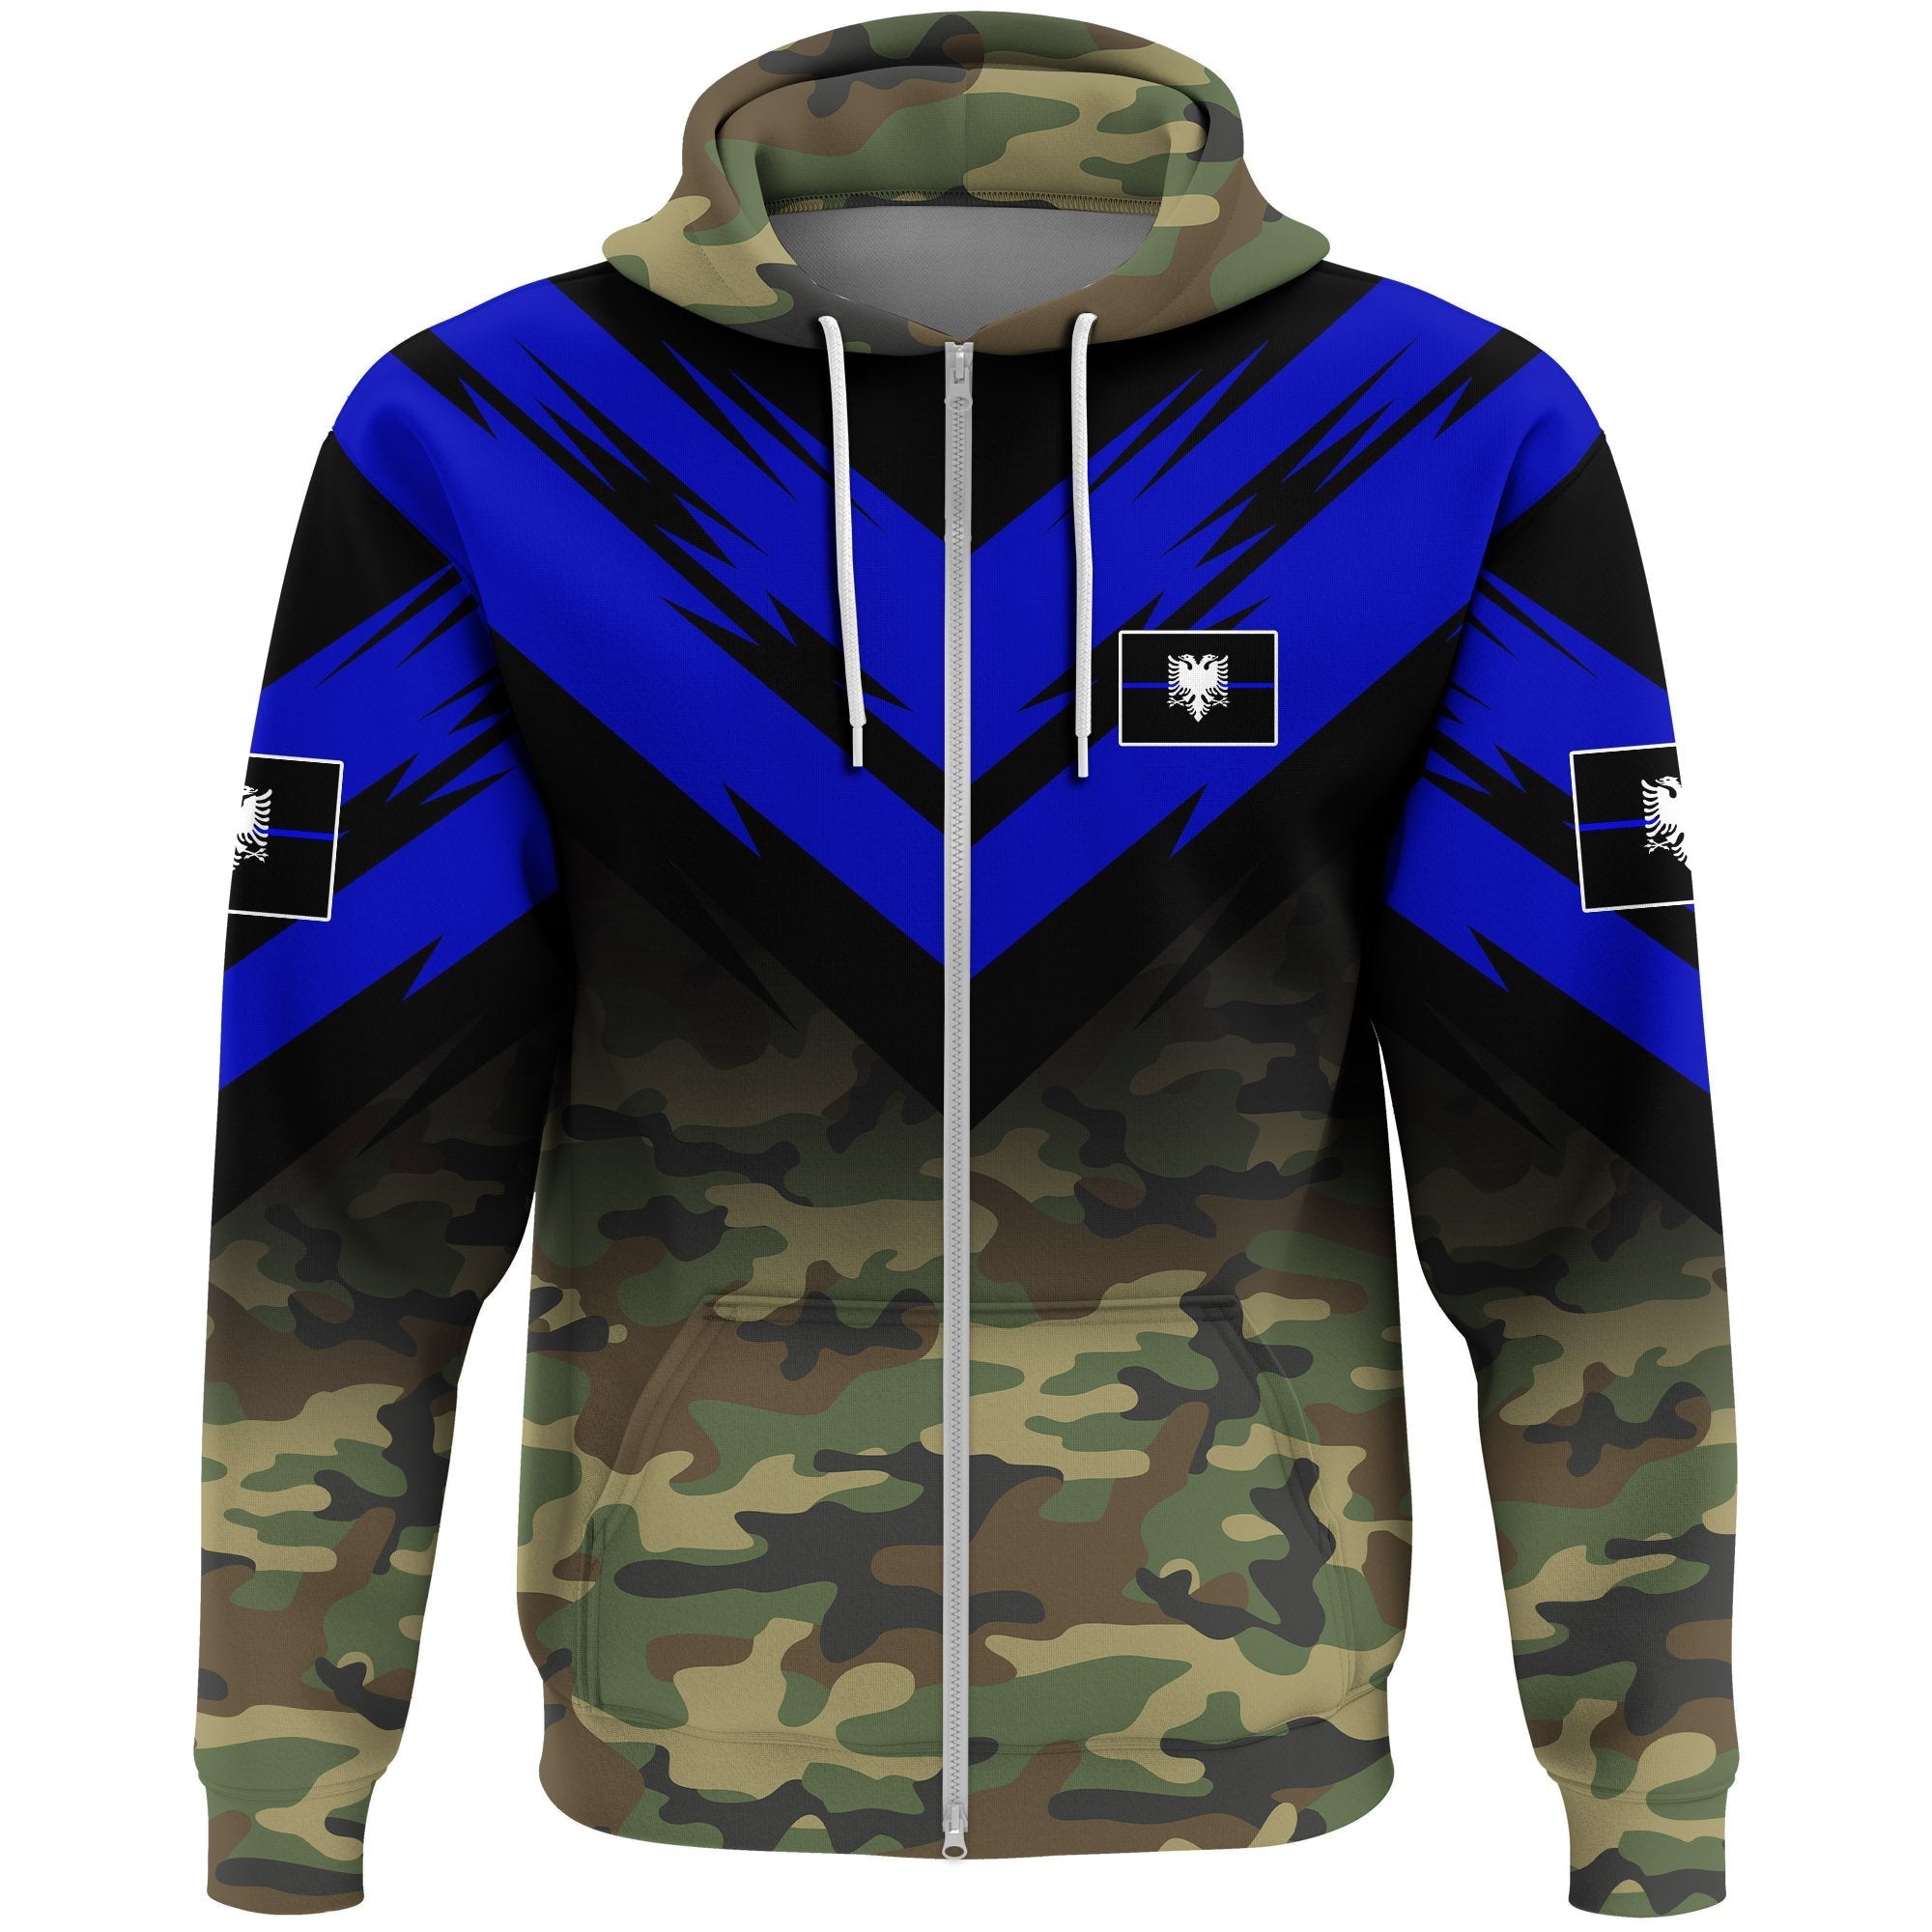 albania-flag-zip-hoodie-based-version-of-the-thin-blue-line-symbol